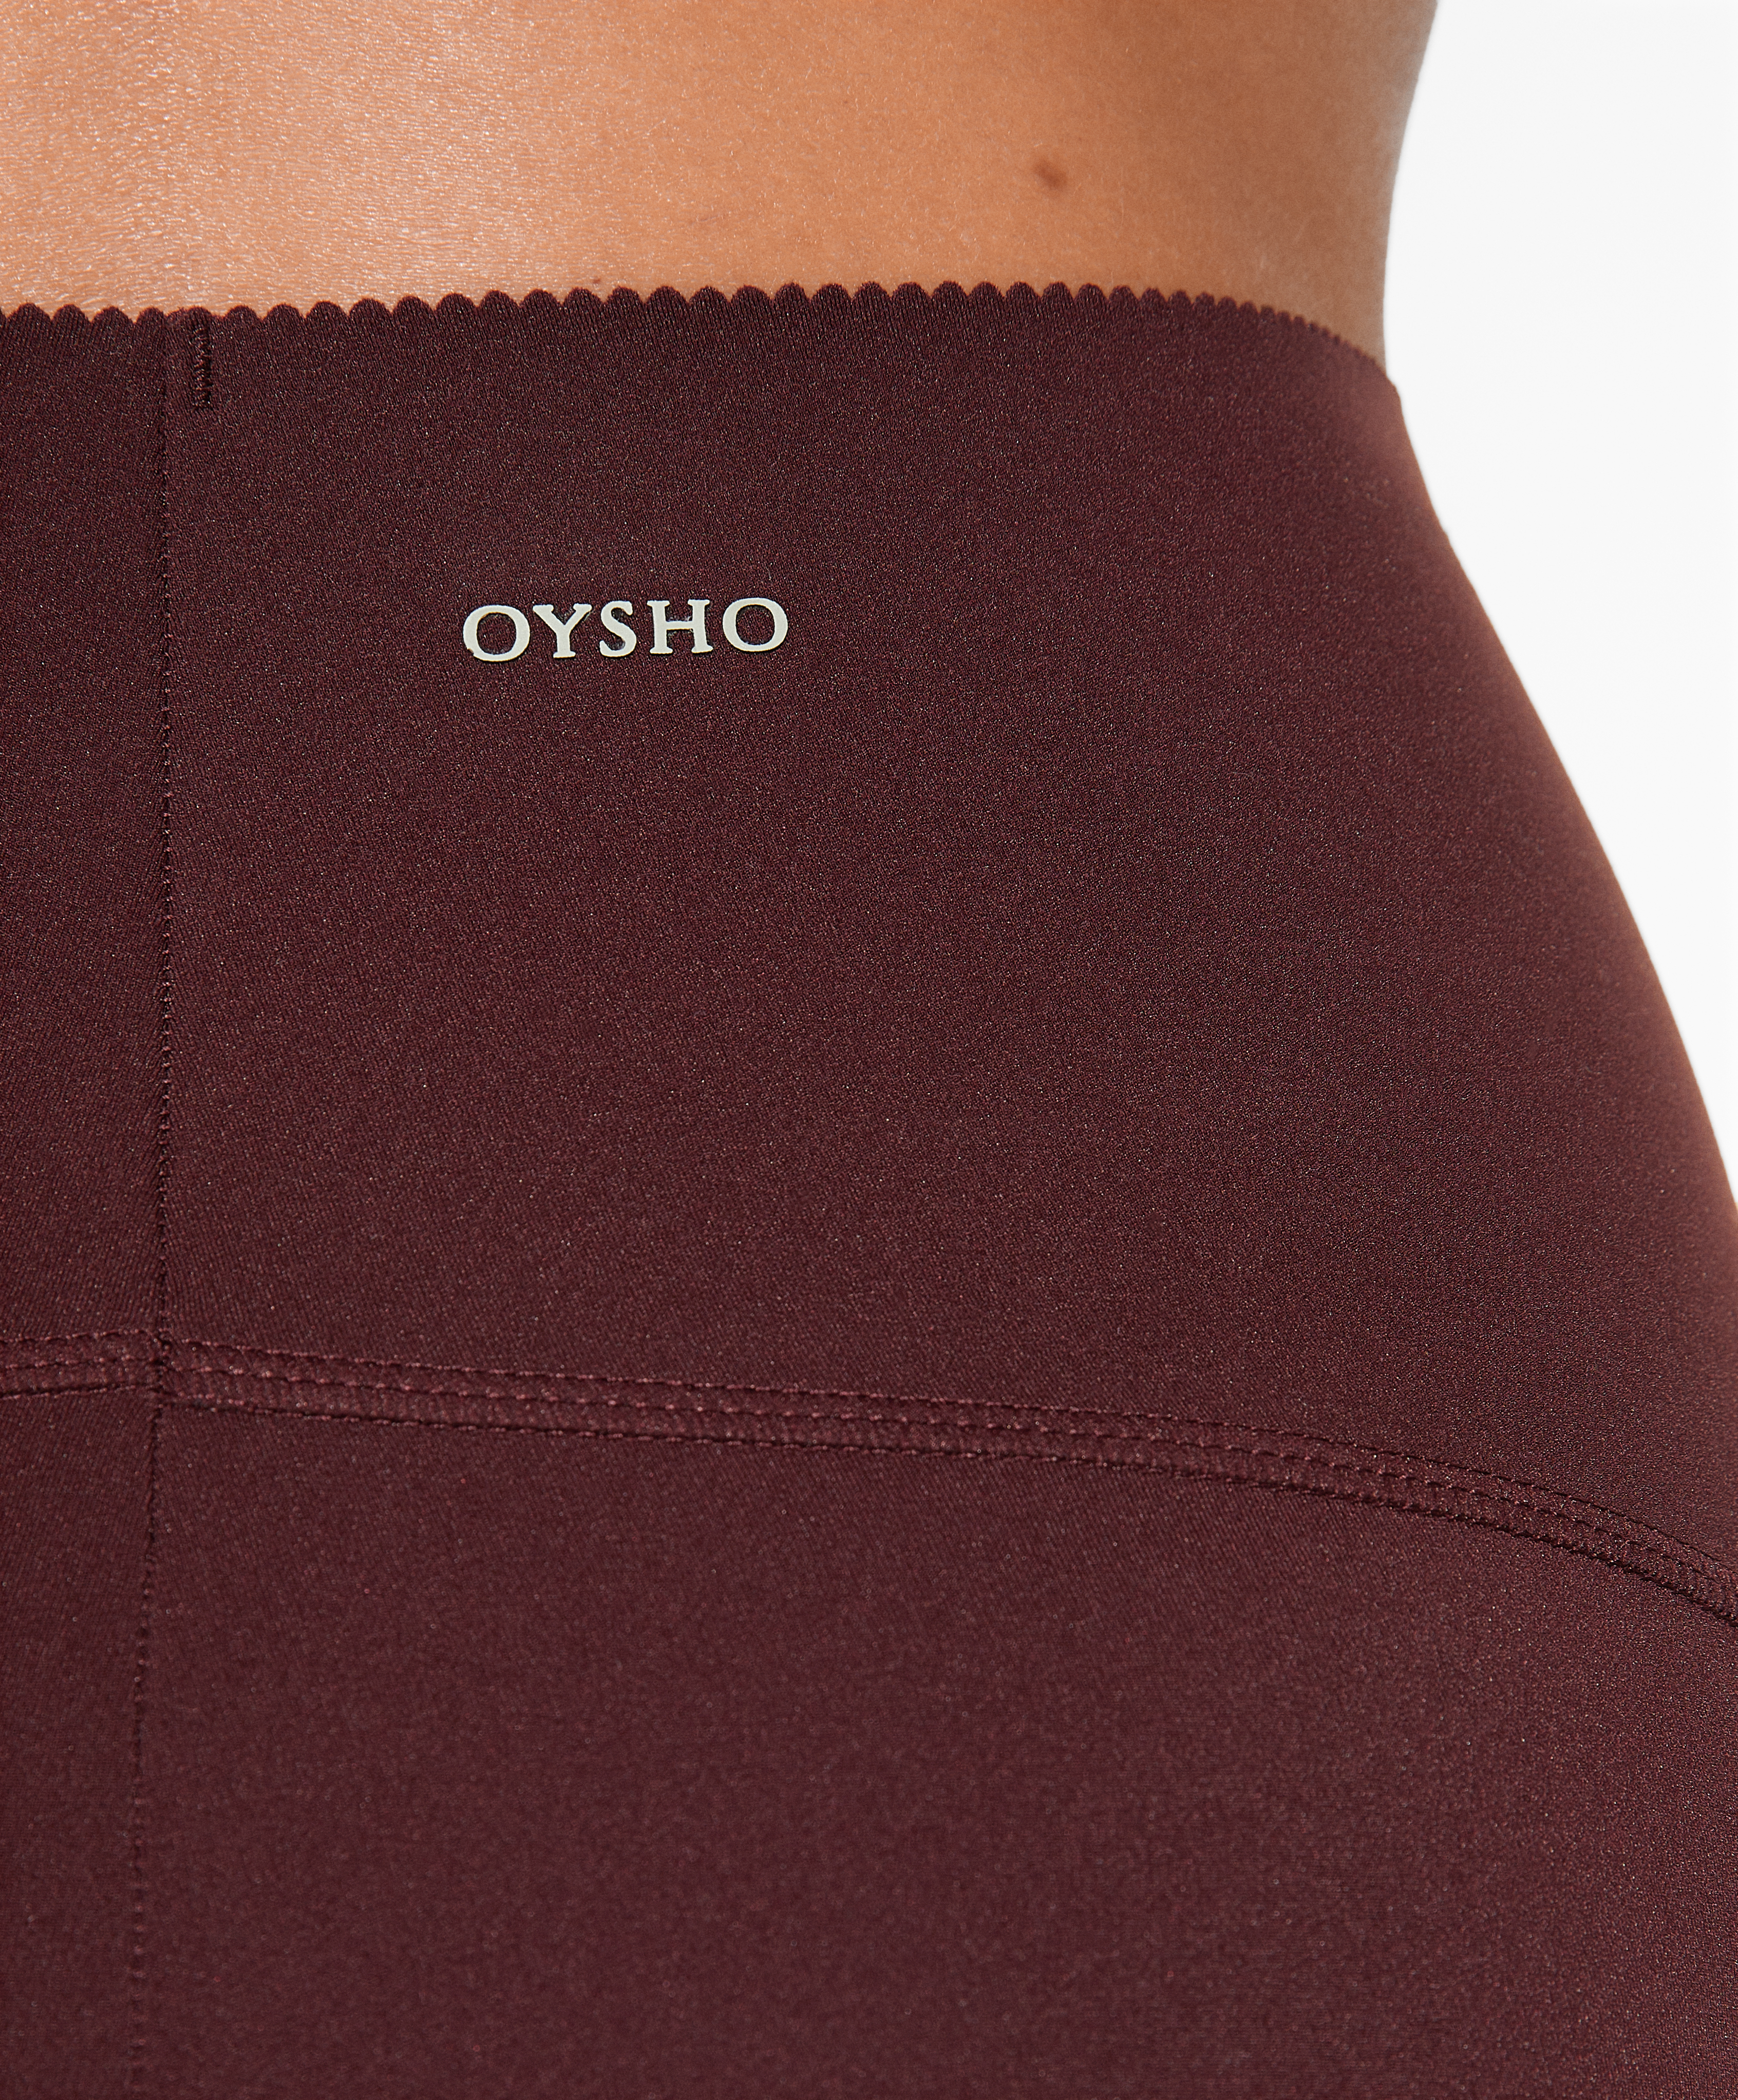 Leggings Oysho #leggings #fitness #oysho  Sportswear design, Yoga bottoms,  Workout clothes